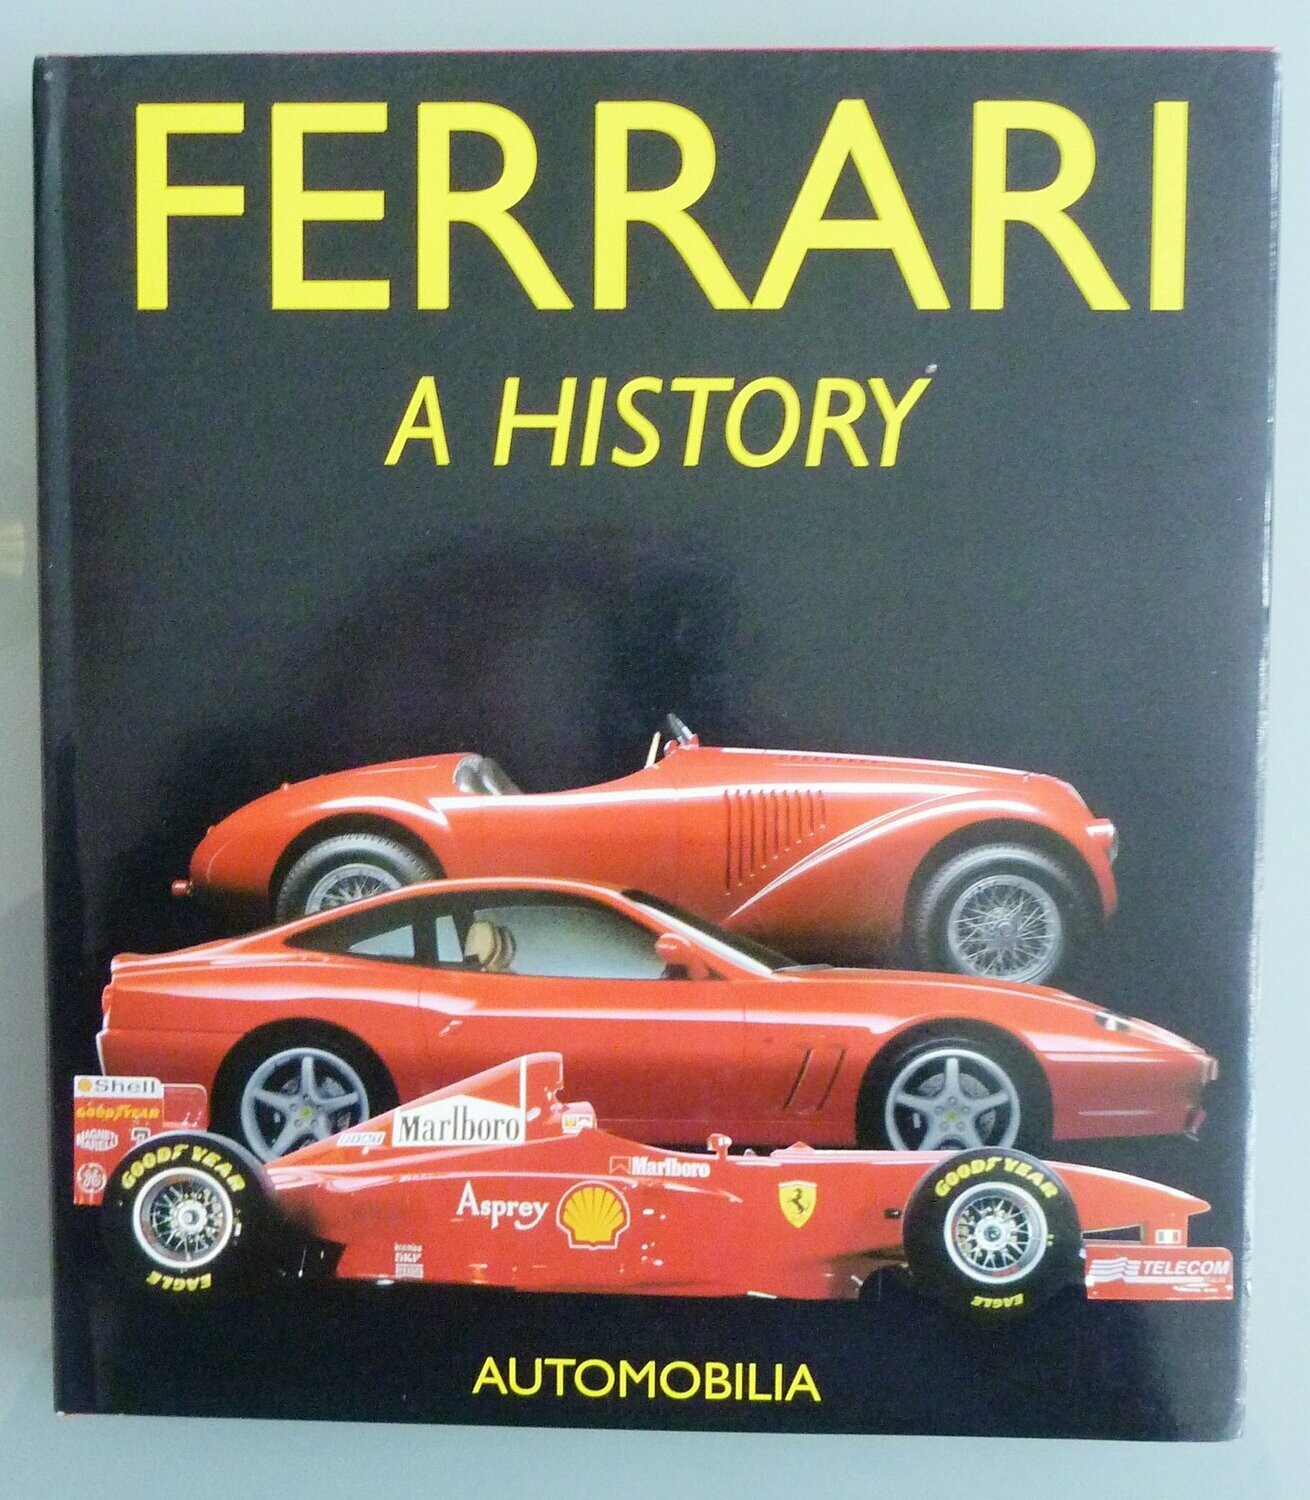 Ferrari A History - edited by Ippolito Alfieri